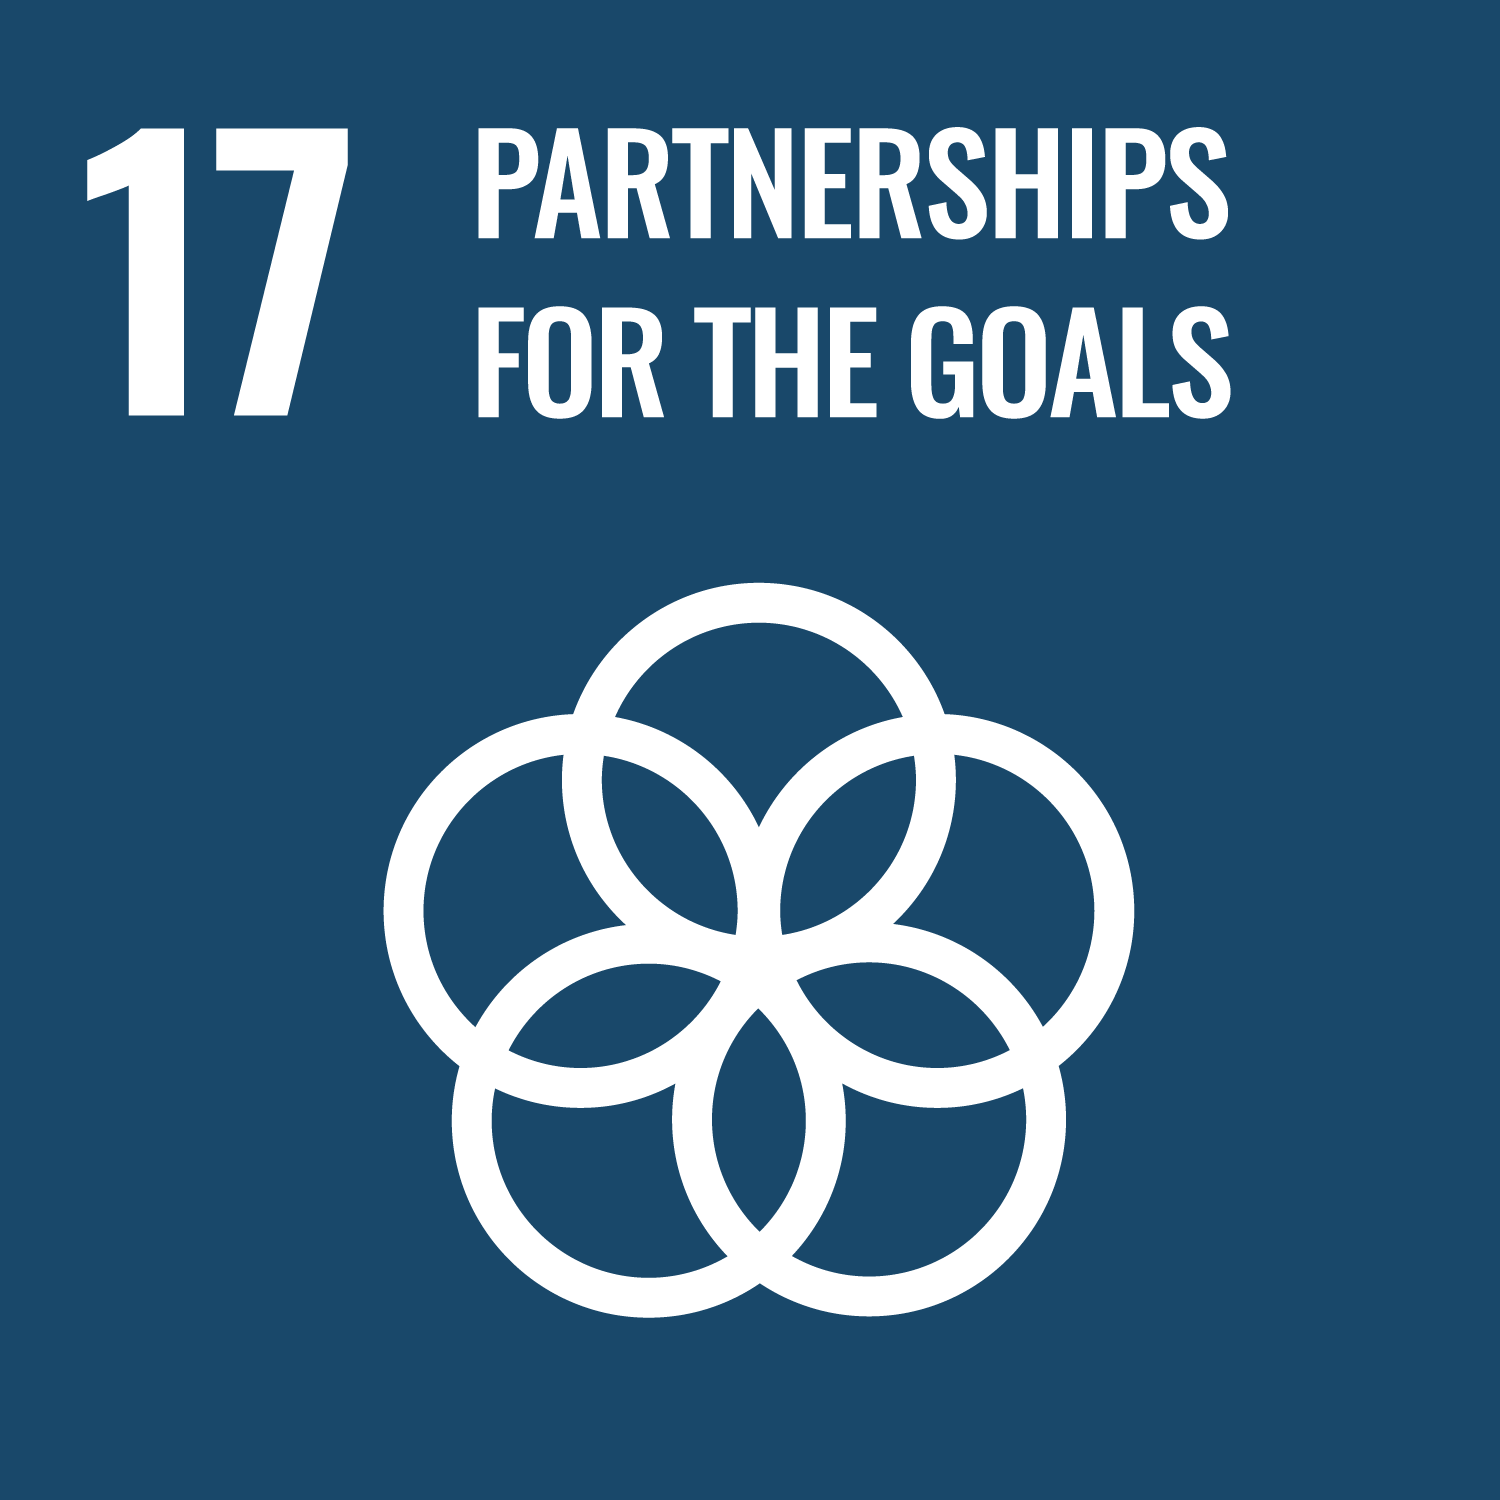 Goal 17 Partnership for the Goals